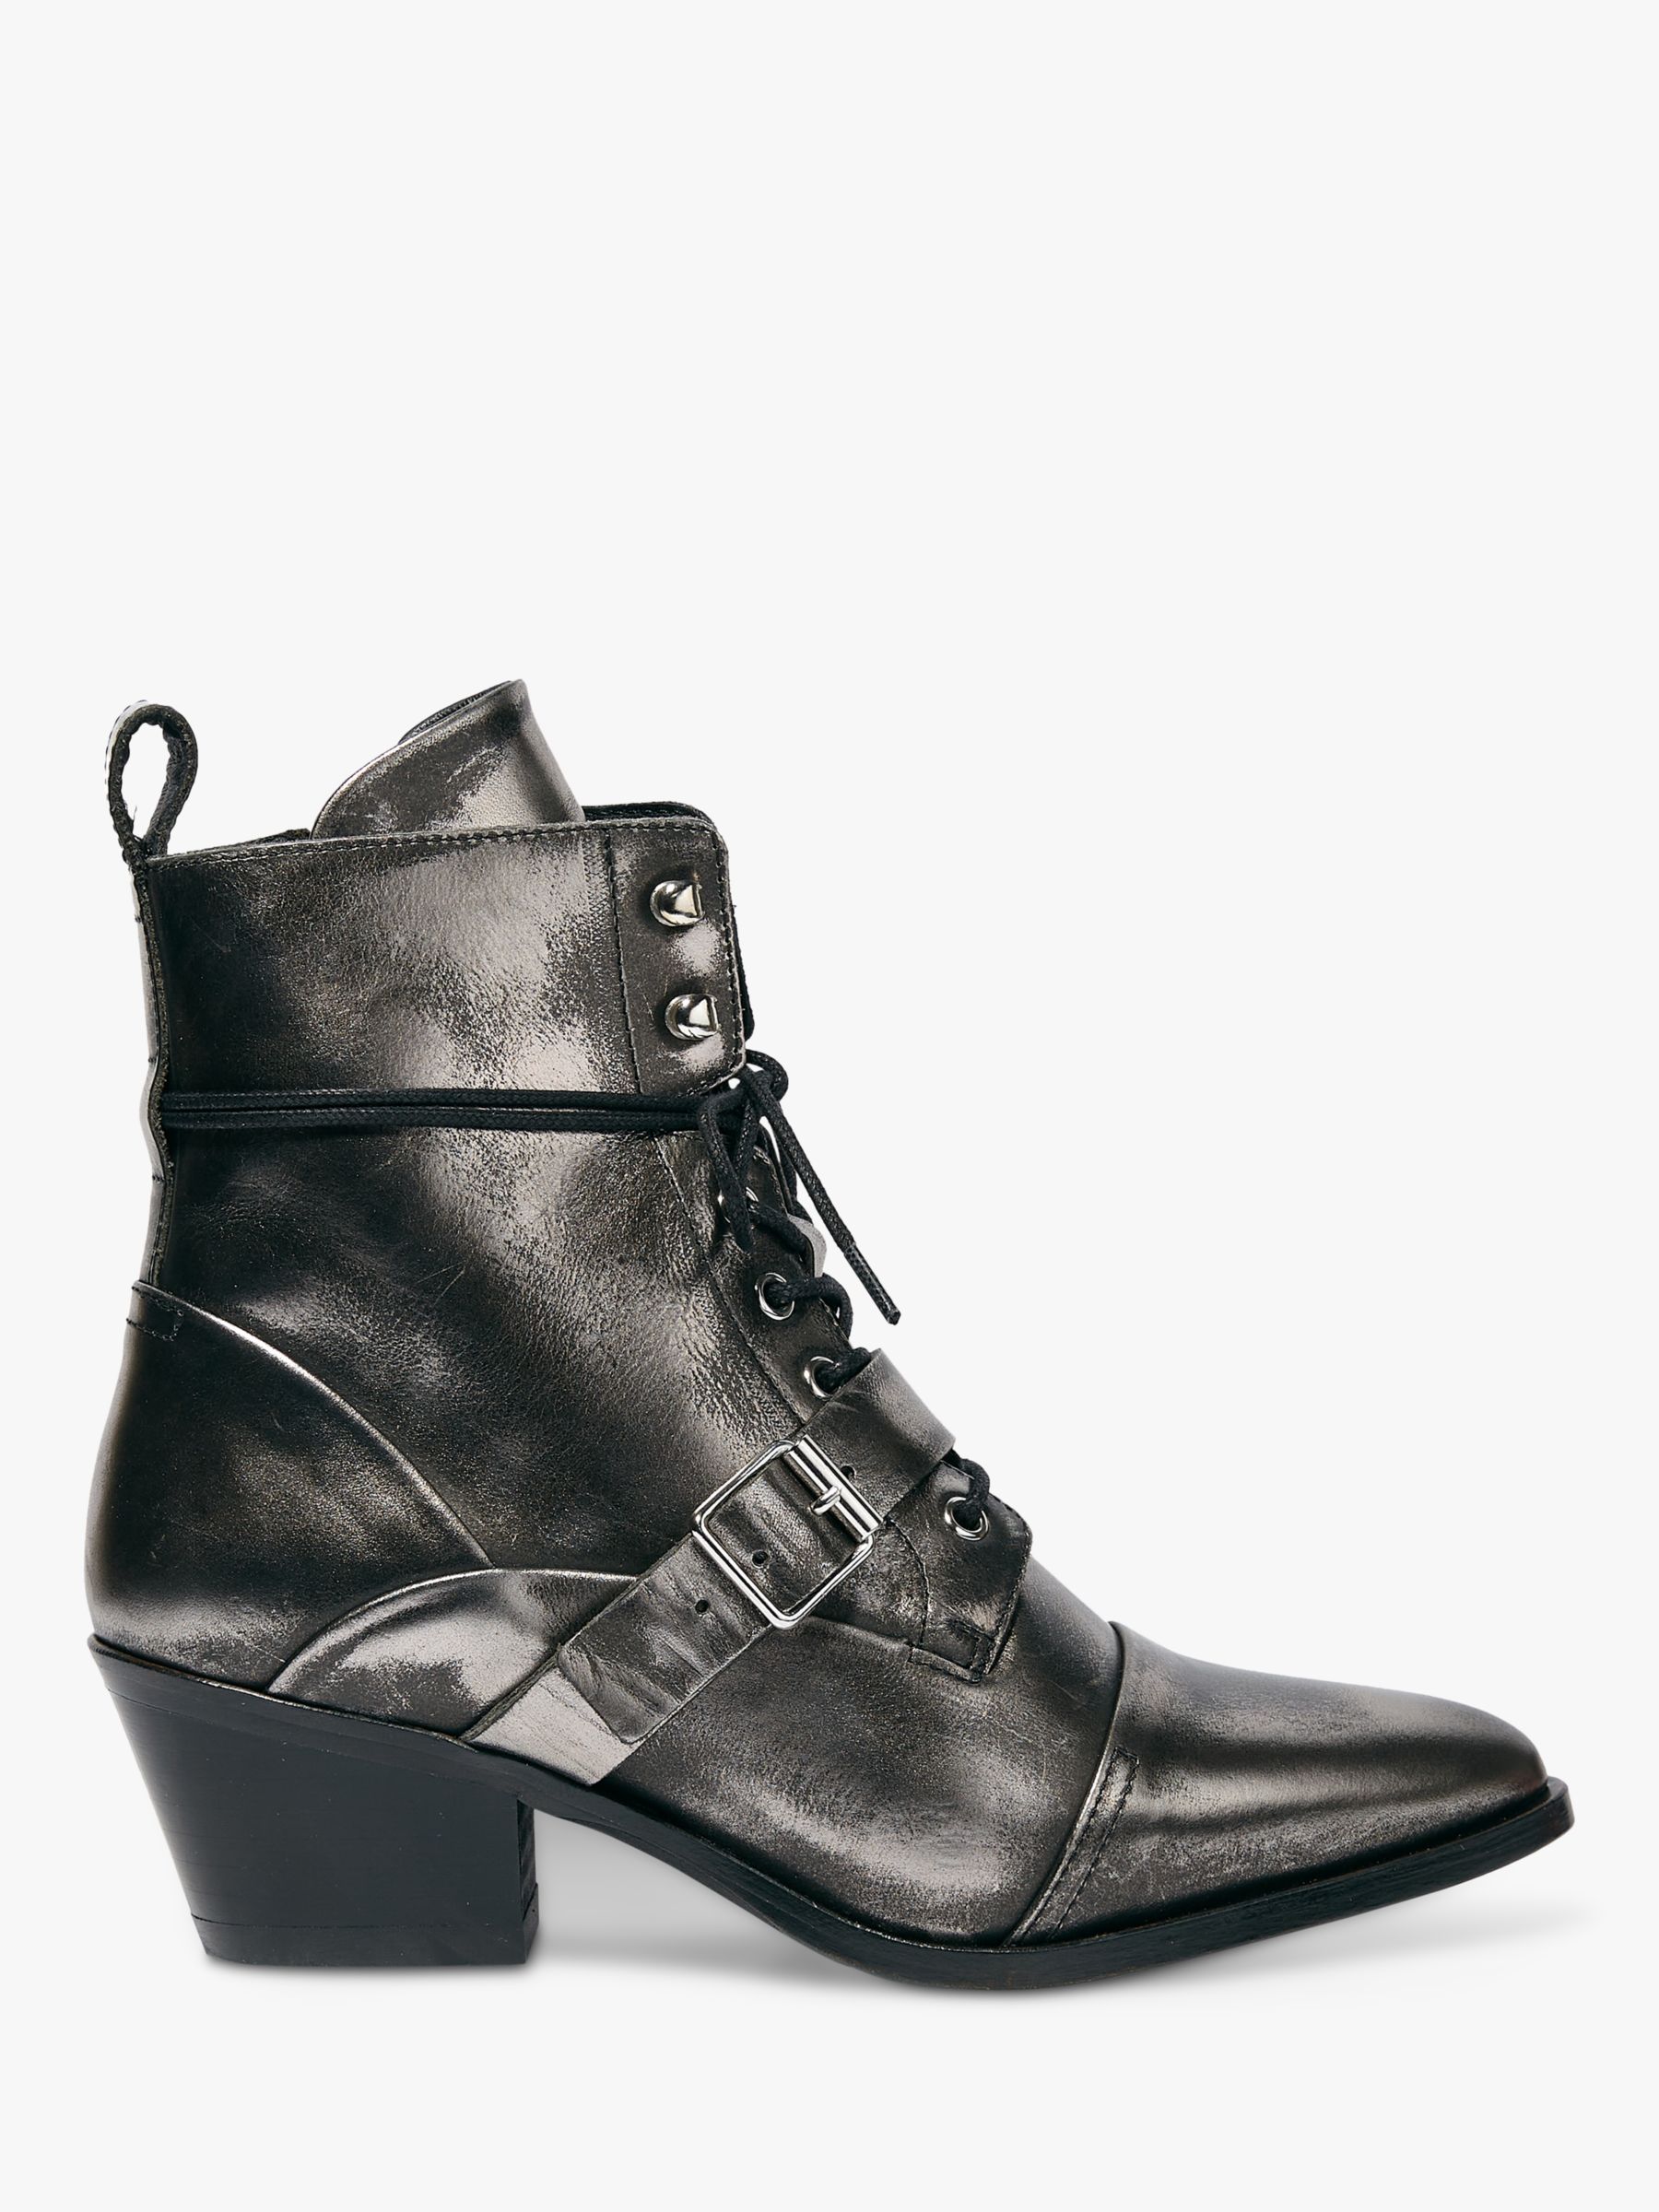 AllSaints Katy Leather Strap Boots, Gunmetal at John Lewis & Partners